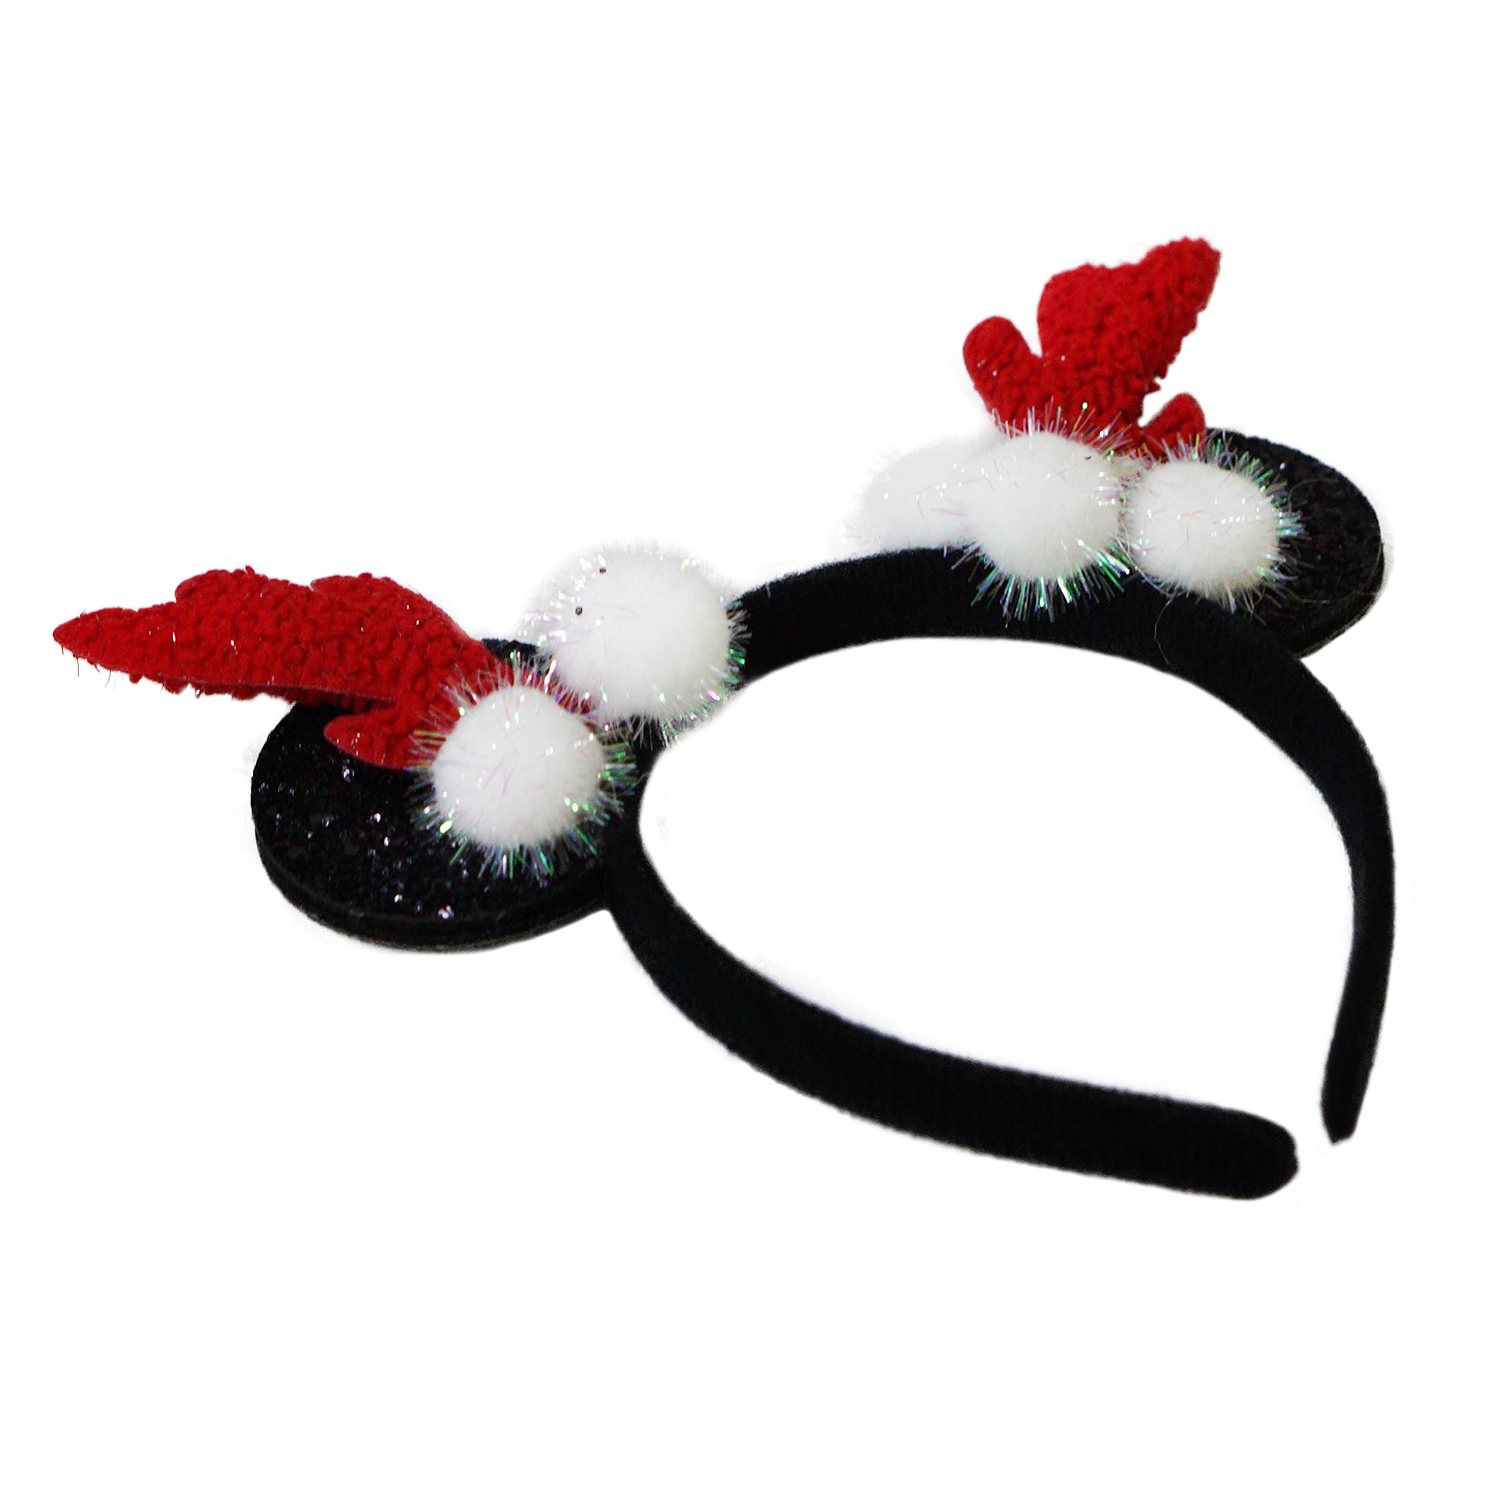 Aiwanto 2Pcs Hair Bands Hair Clippers Christmas Costume Hair Bands Hair Accessories